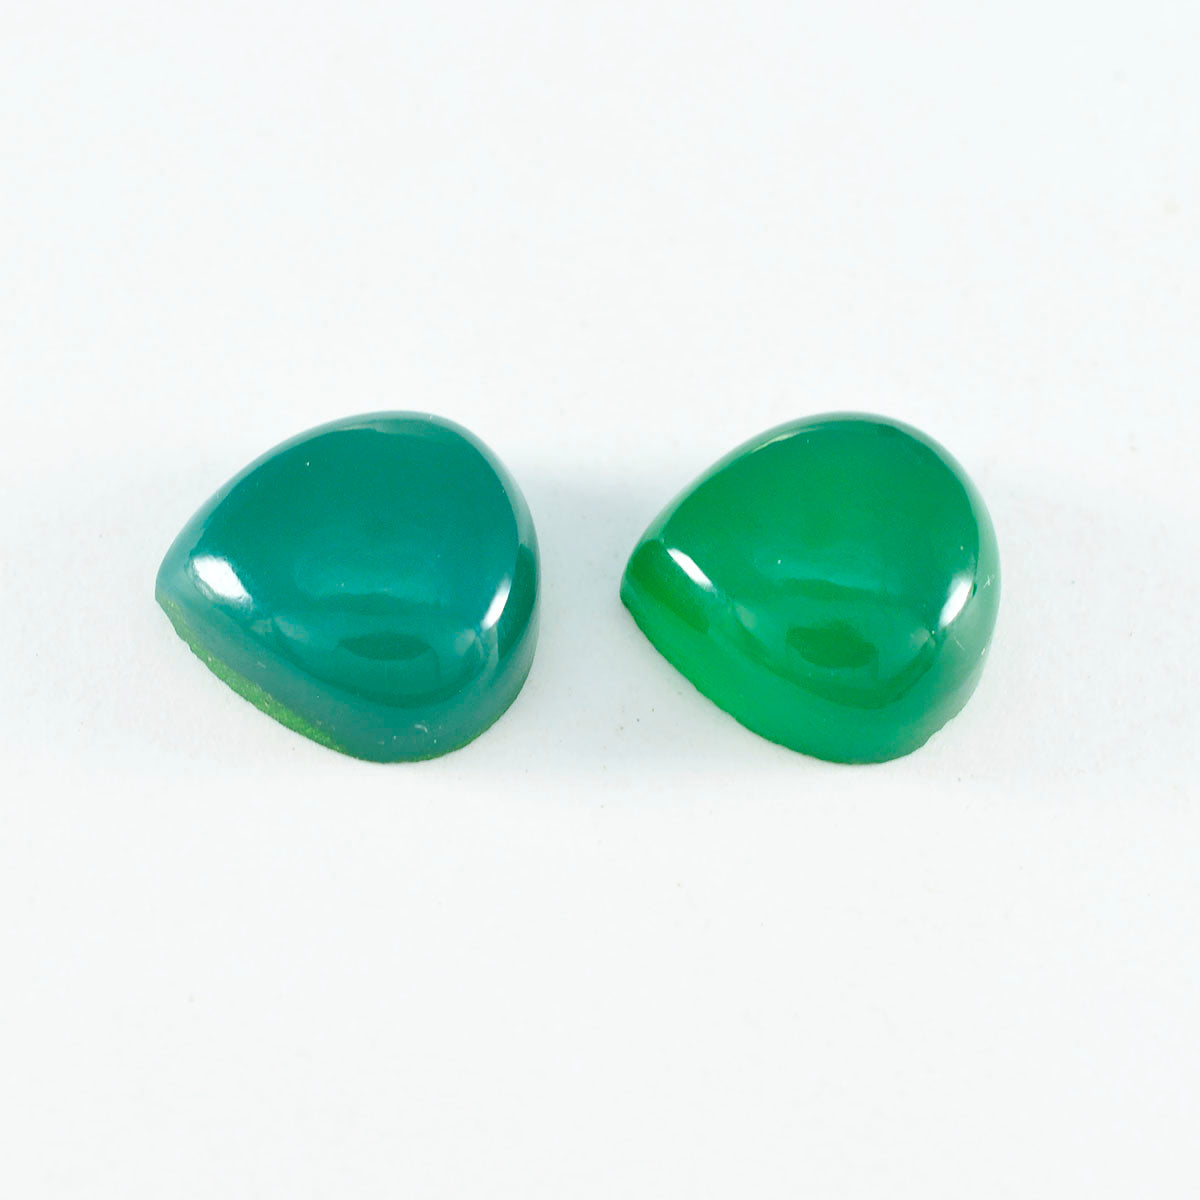 Riyogems 1 Stück grüner Onyx-Cabochon, 11 x 11 mm, Herzform, wunderbarer Qualitäts-Edelstein